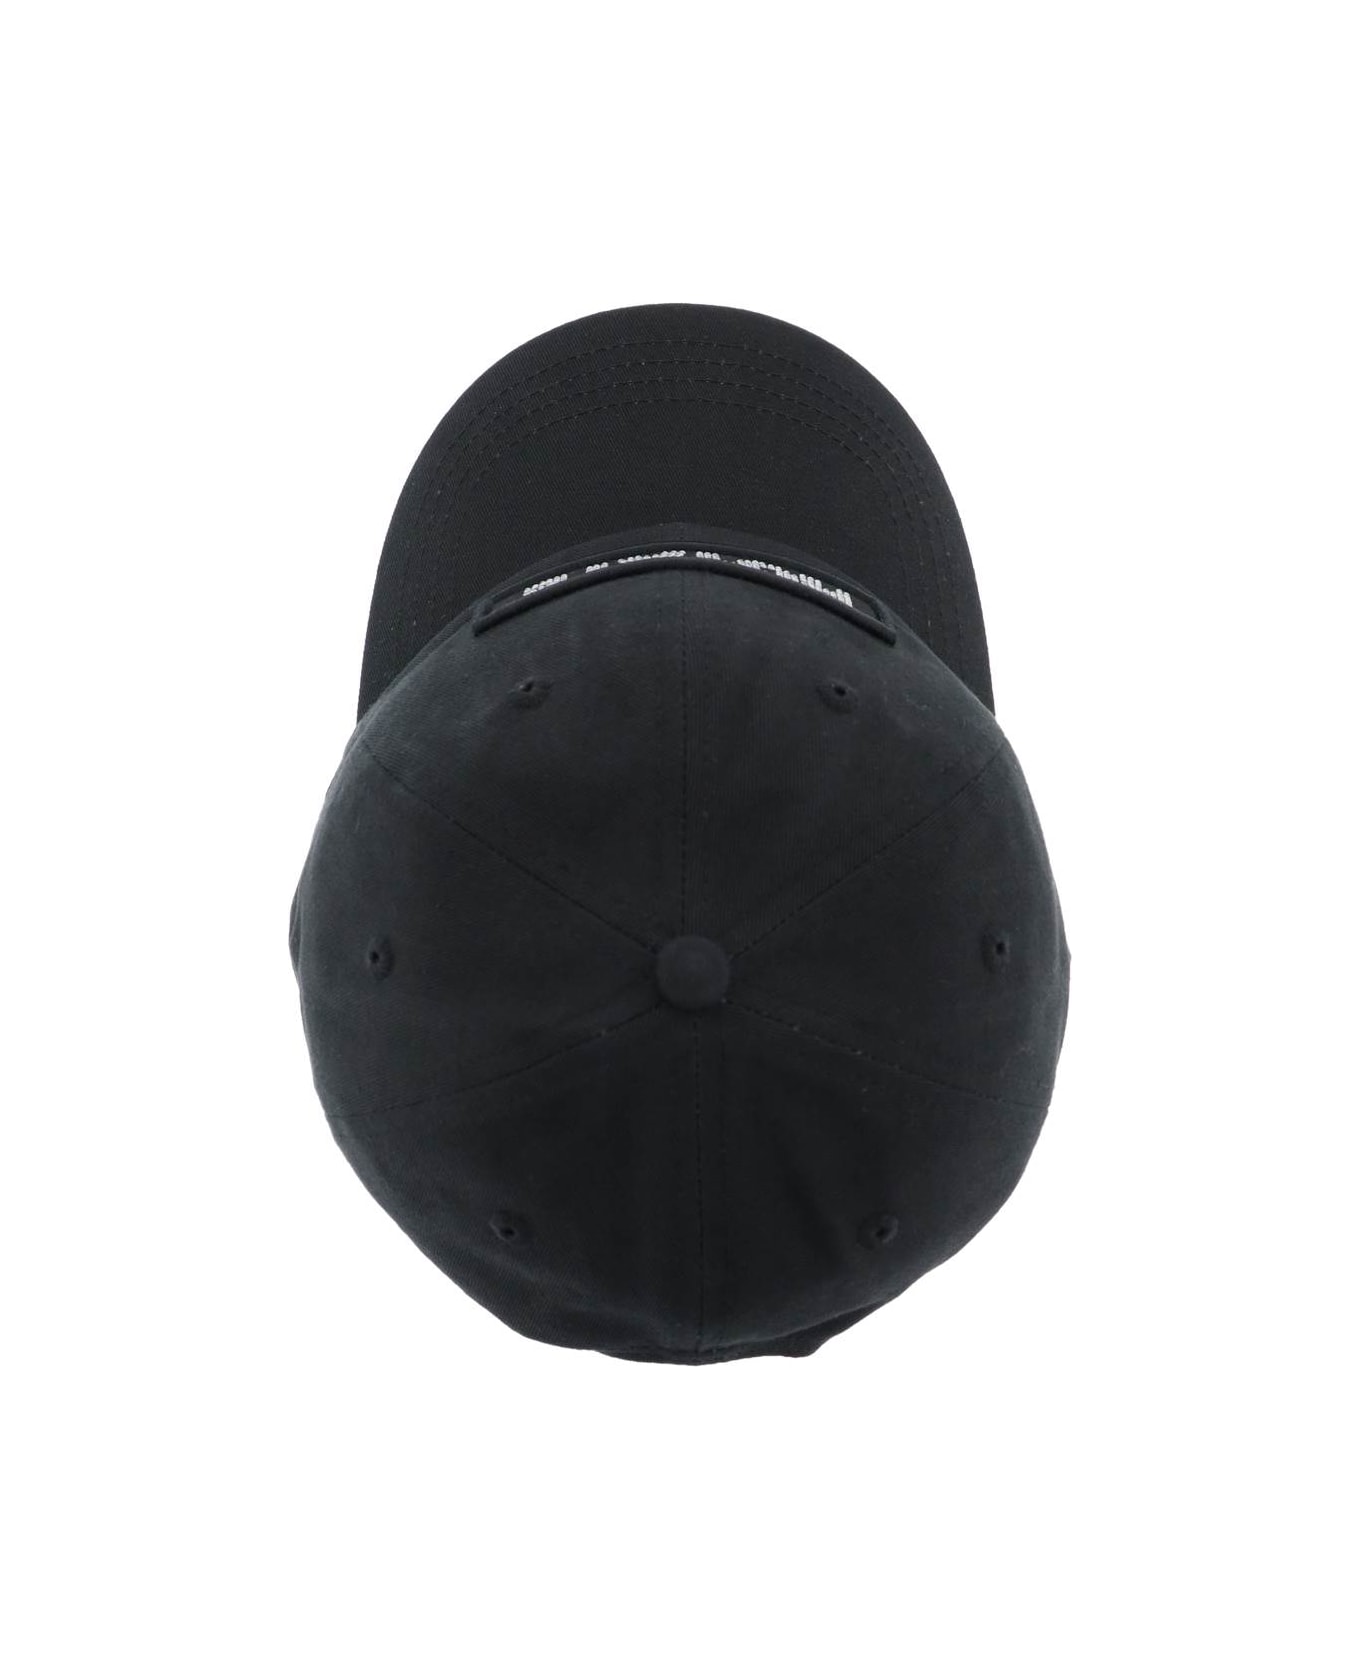 Rotate by Birger Christensen Cotton Baseball Cap With Rhinestone Logo - BLACK (Black) ヘアアクセサリー